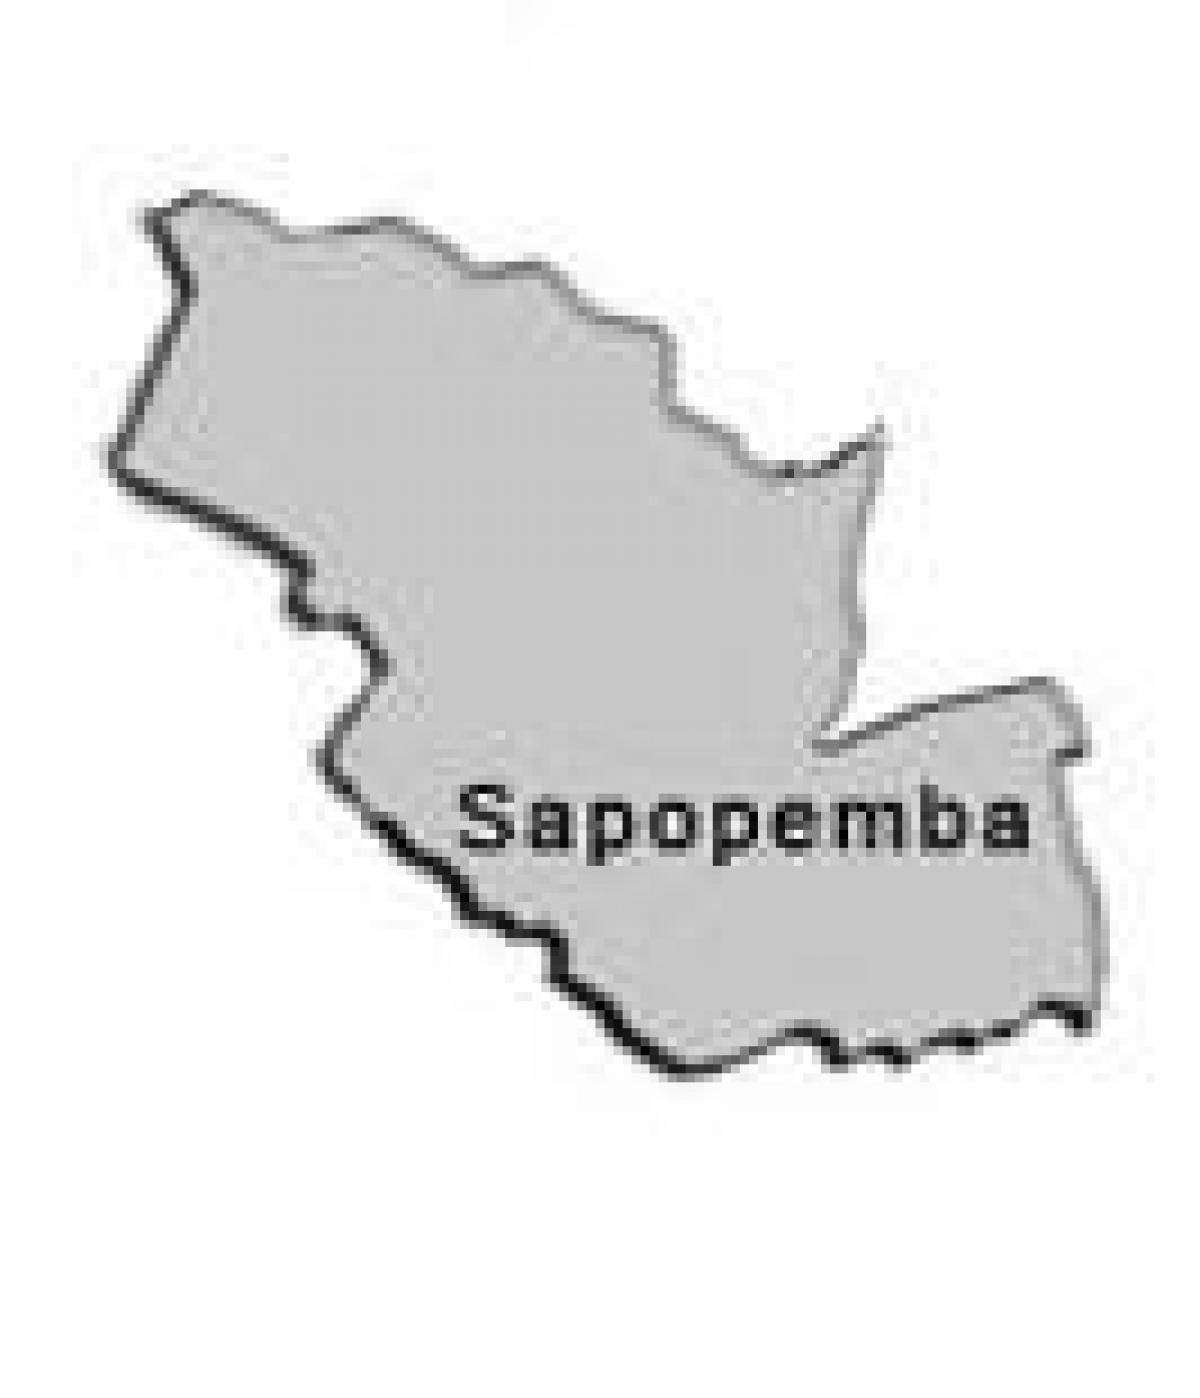 Ramani ya Sapopembra ndogo-mkoa